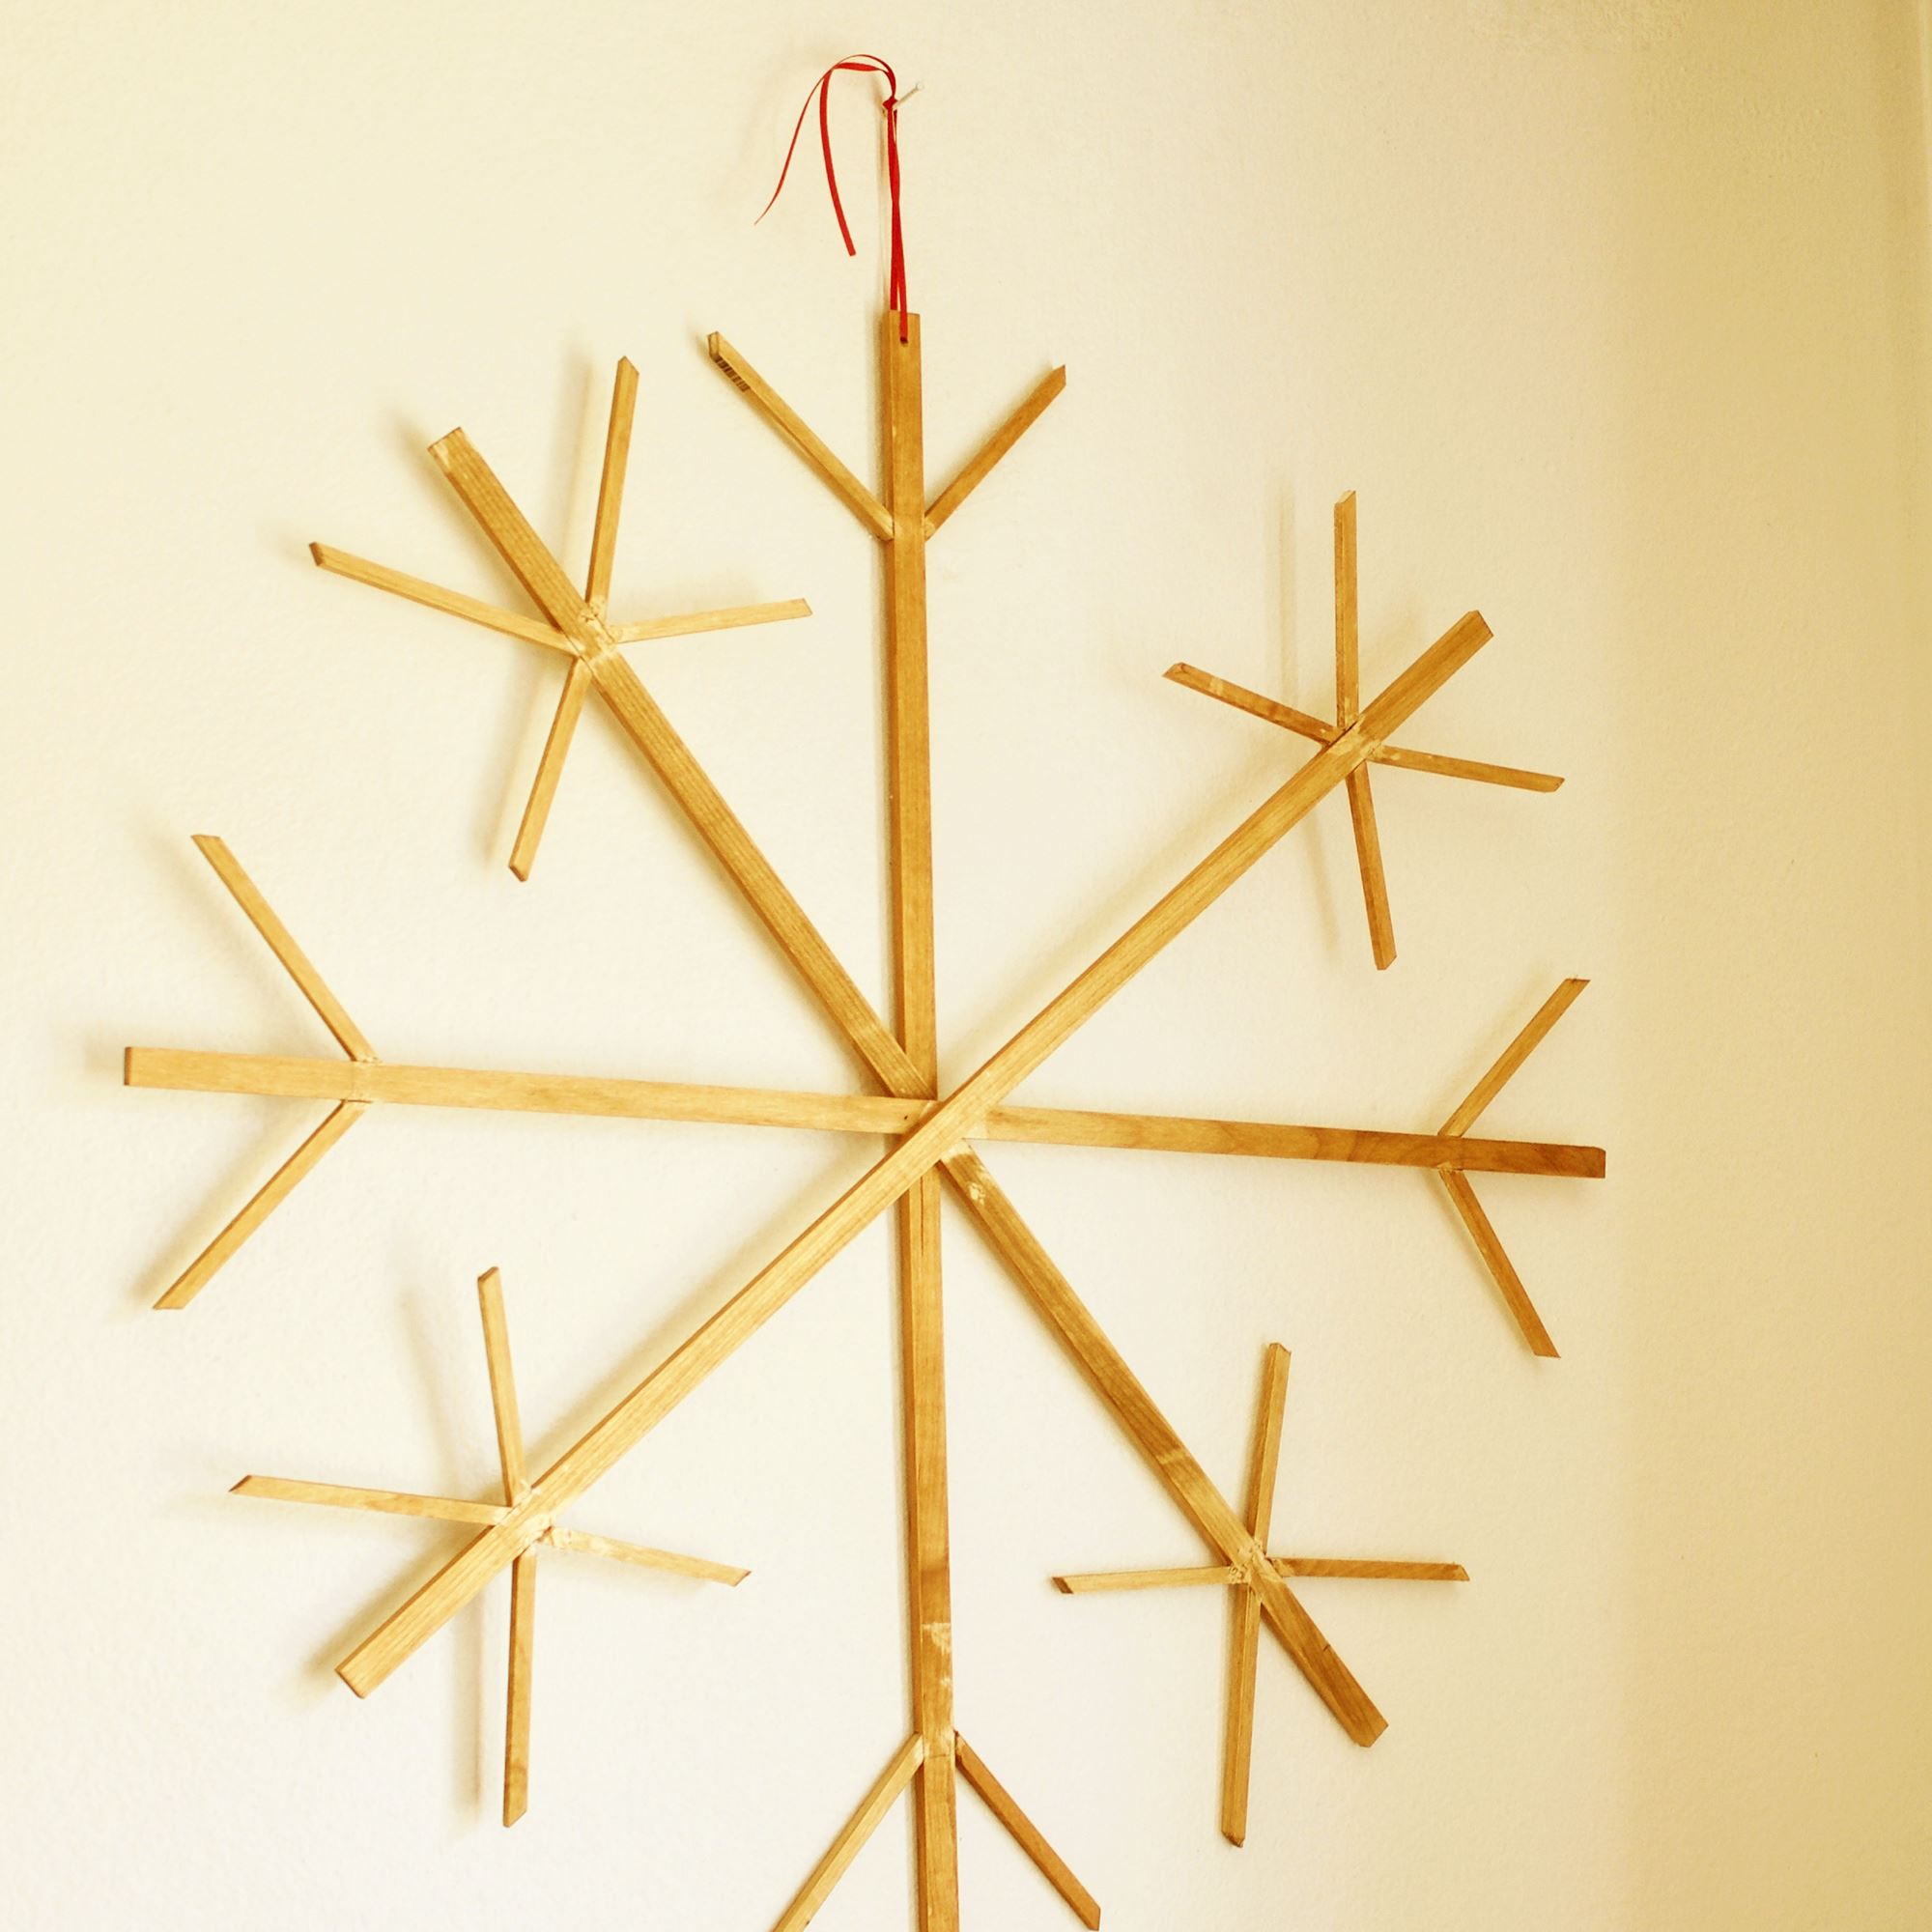 Wooden Snowflakes